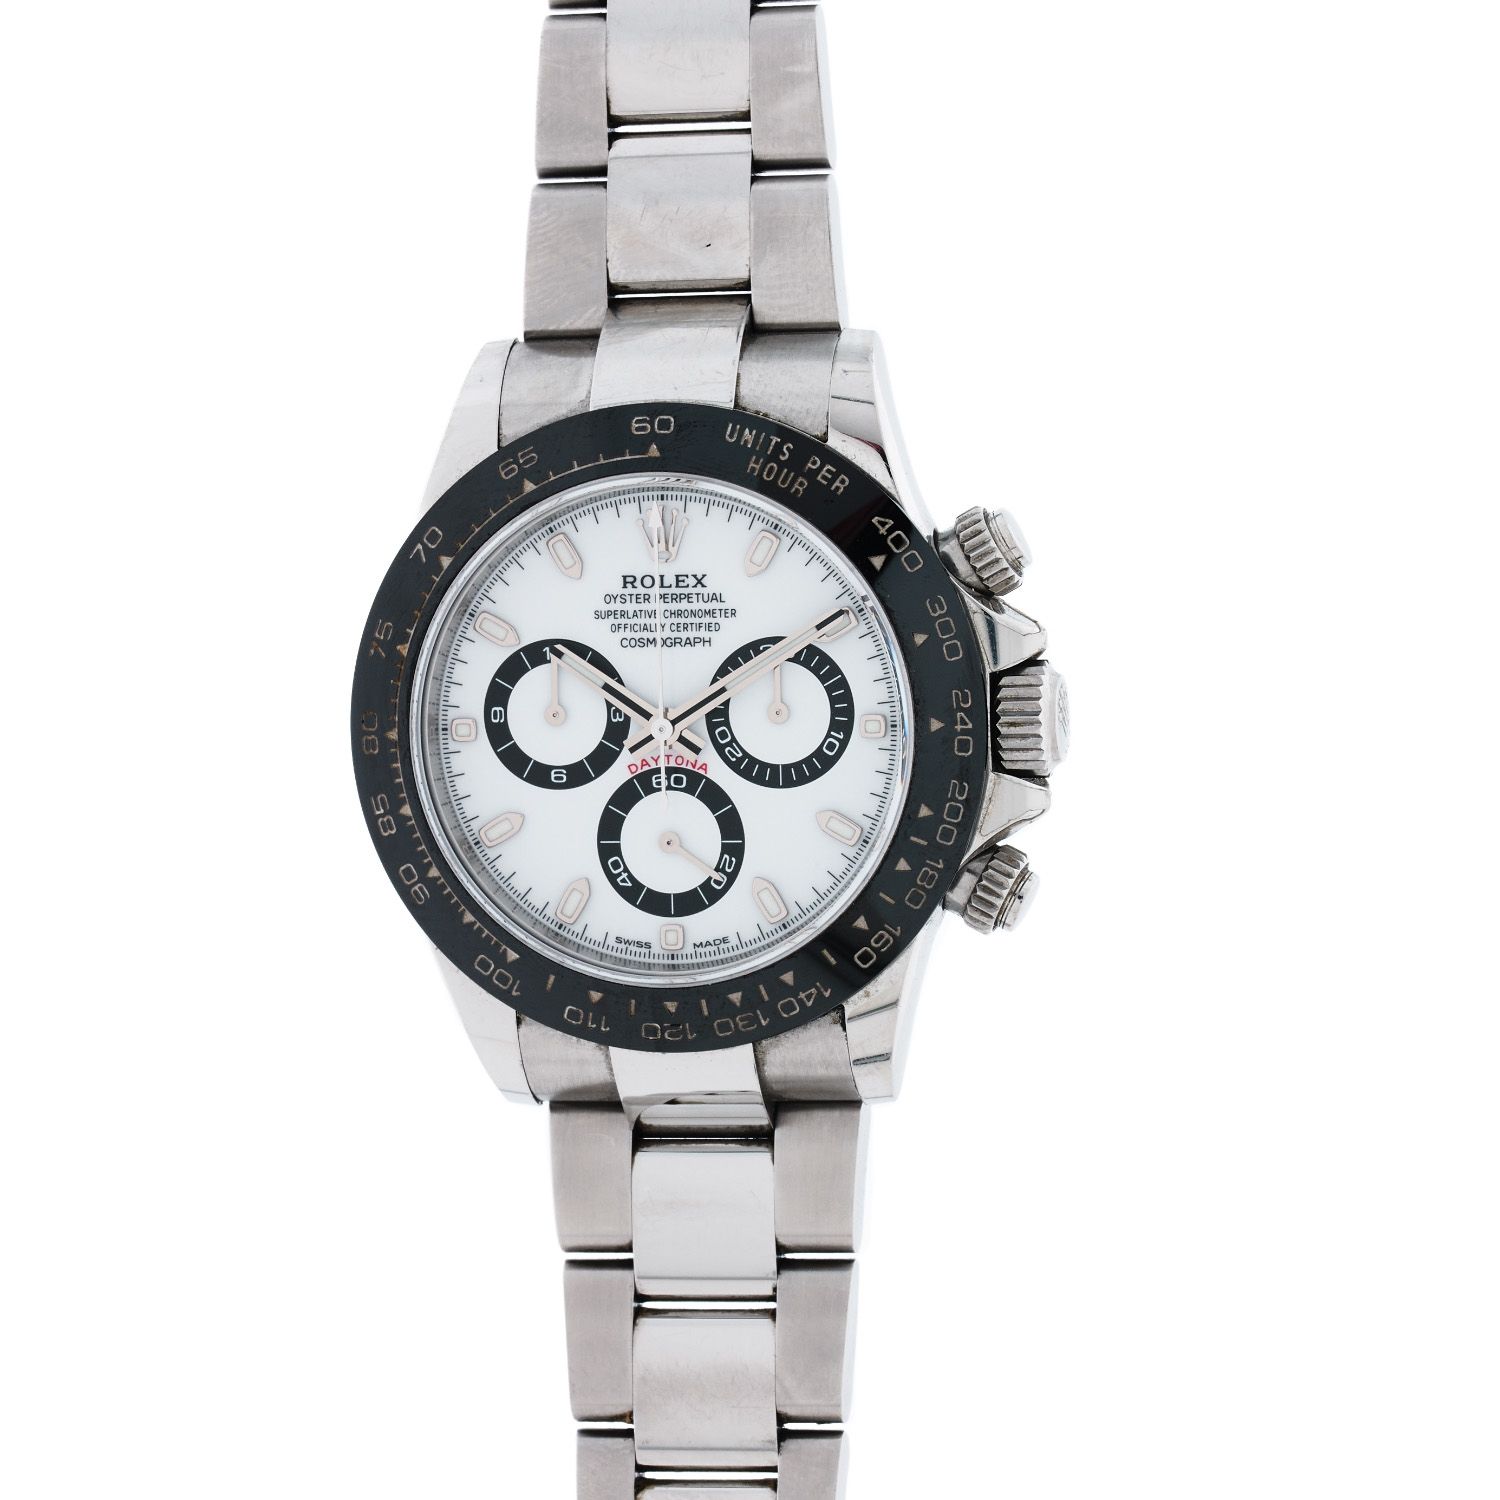 Null 劳力士
戴通纳（DAYTONA）宇宙计型陶瓷腕表。
编号：116500LN。
制作年代：2021 年。
劳力士 Daytona，精钢计时码表，白色表盘&hellip;